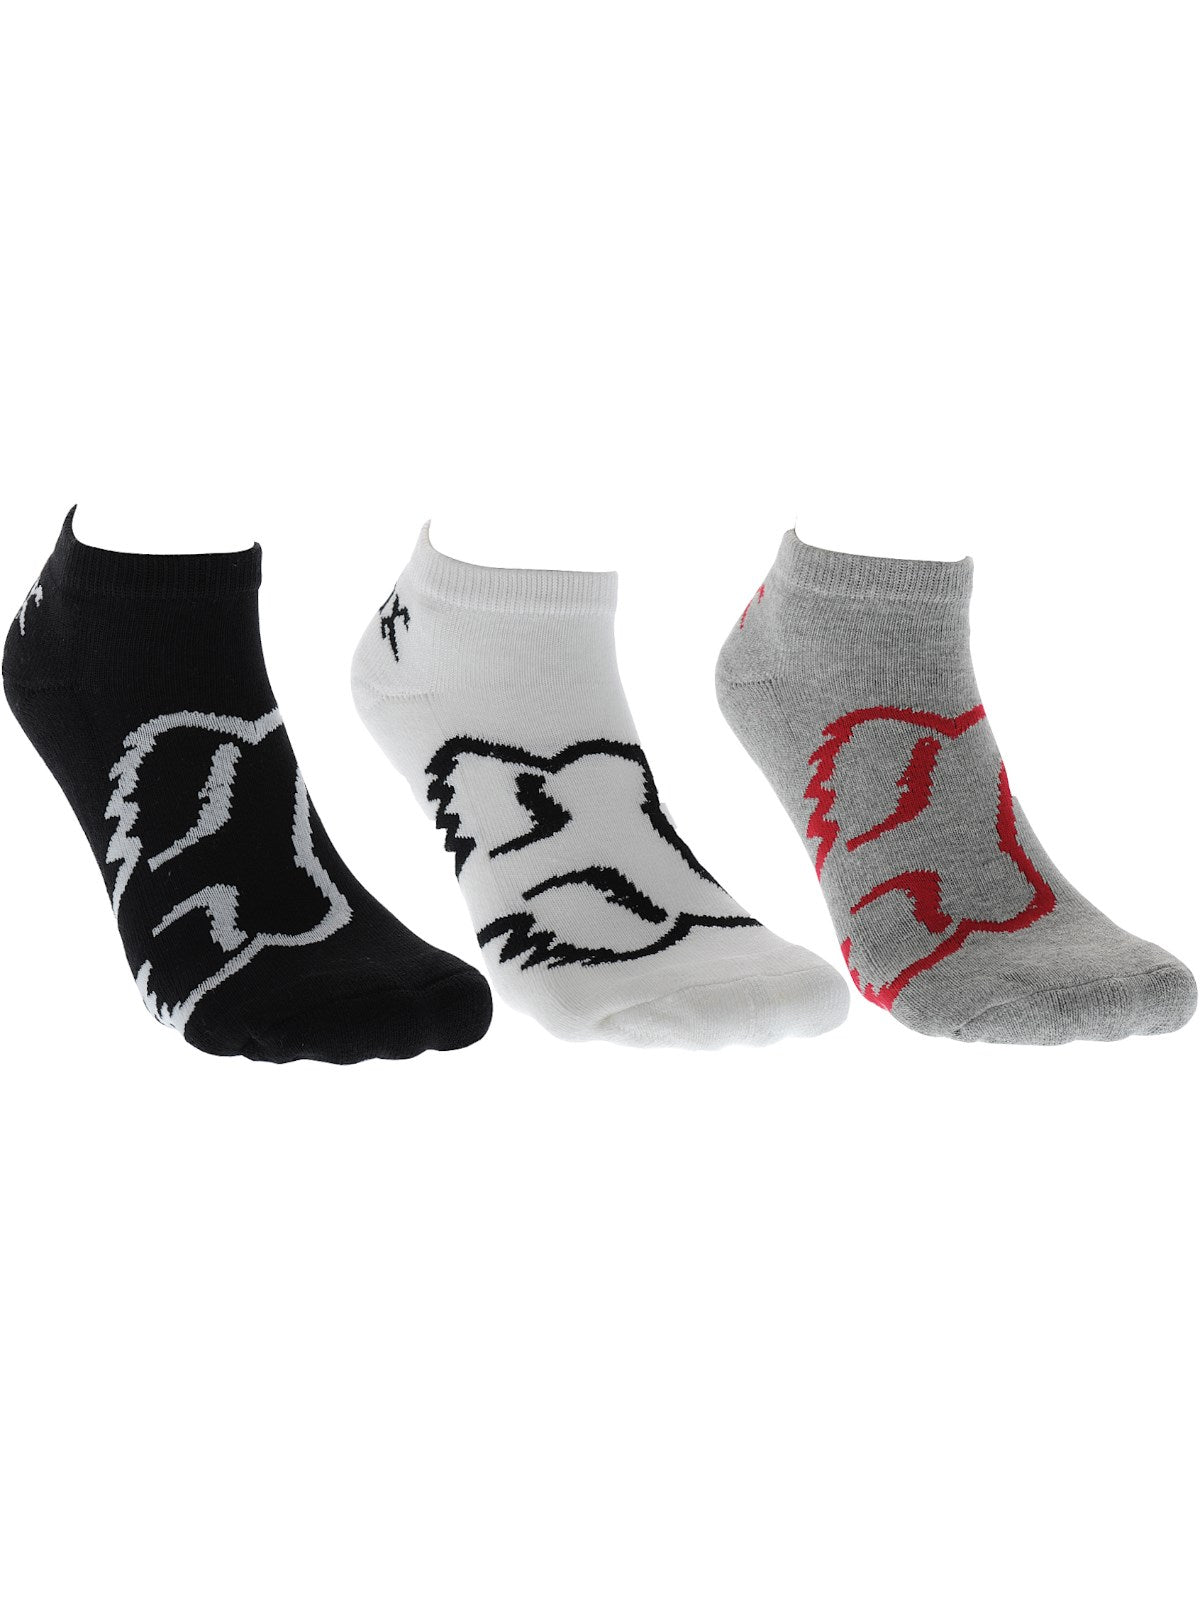 Fox Basic Core 1" Cuff Socks (3 Pack)